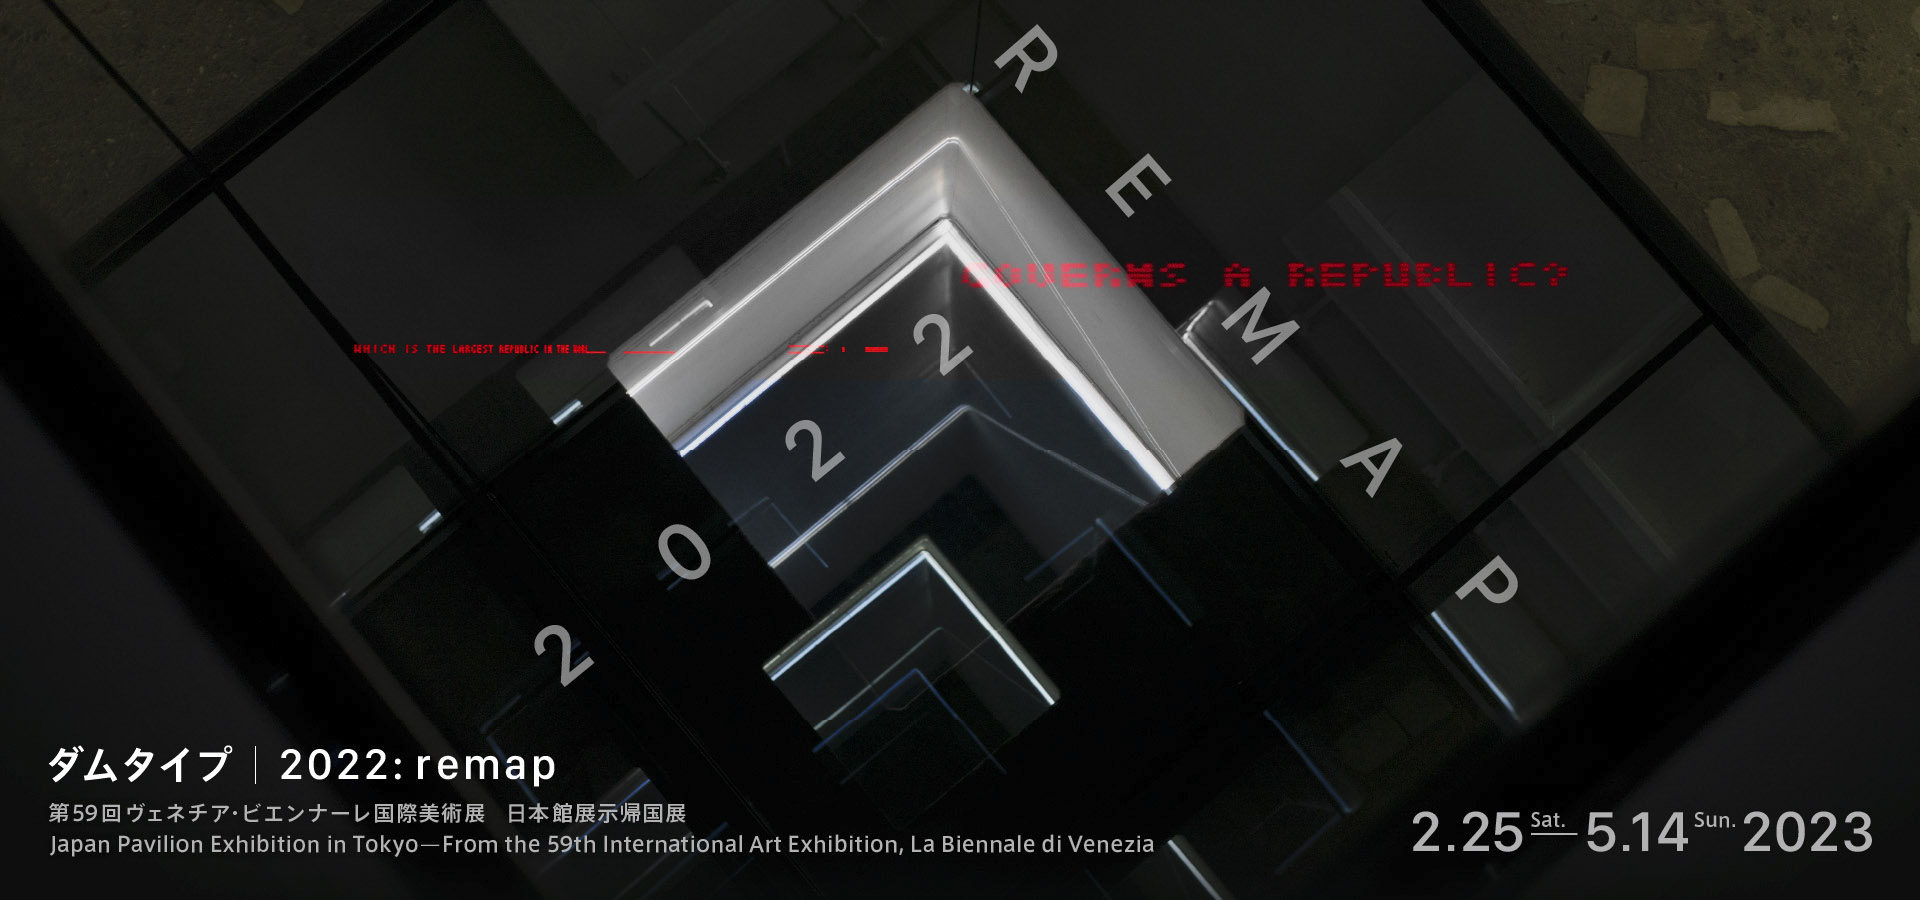 Japan Pavilion Exhibition in Tokyo —From the 59th International Art Exhibition, La Biennale di Venezia Dumb Type, 2022: remap